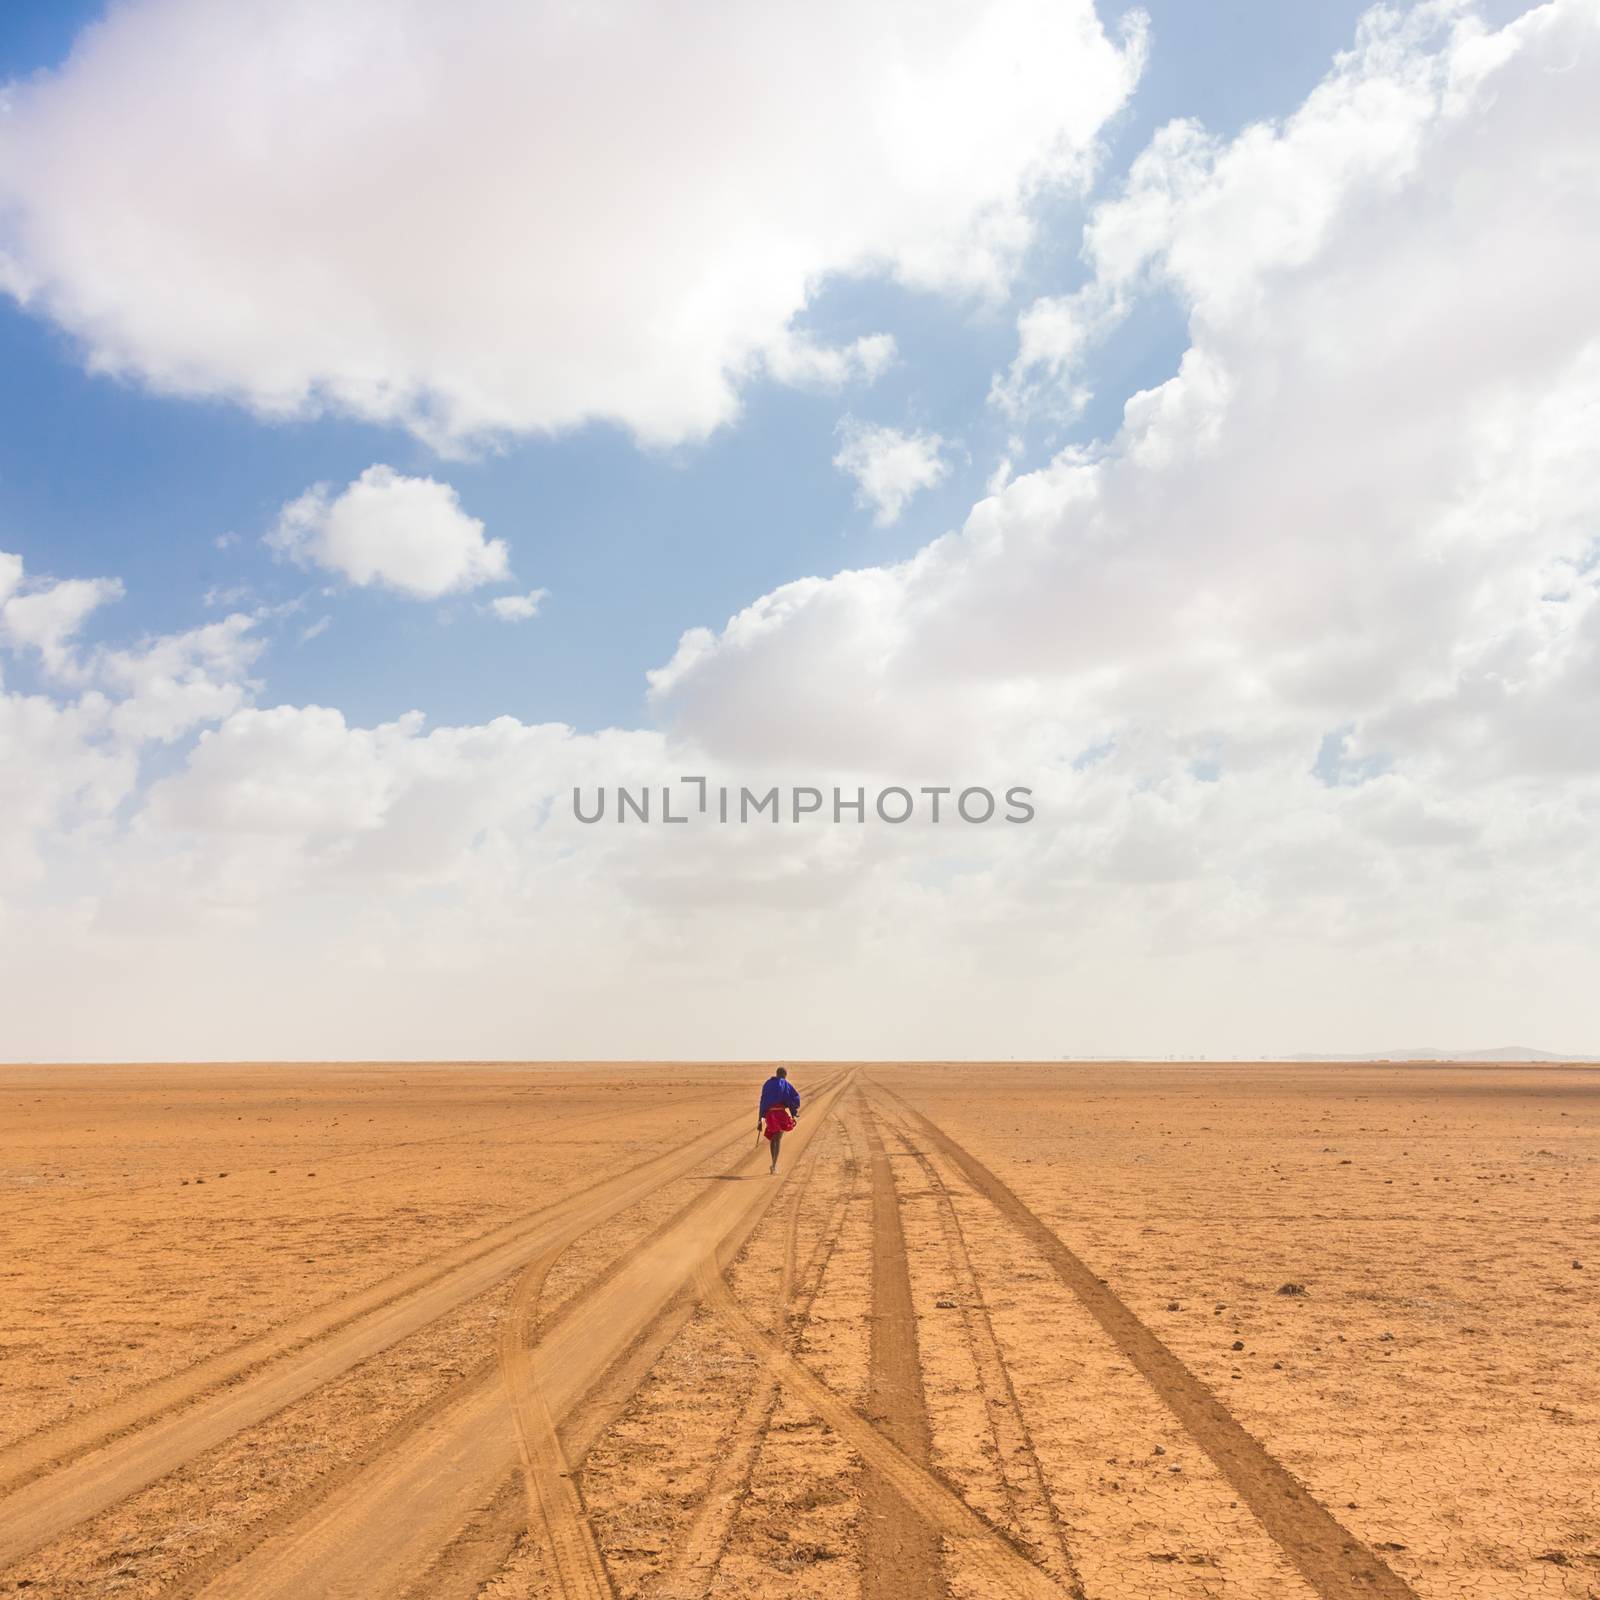 Solitary masai worrior walking along salt lake desert road in Kenya, Amboseli Natural Park, Africa.